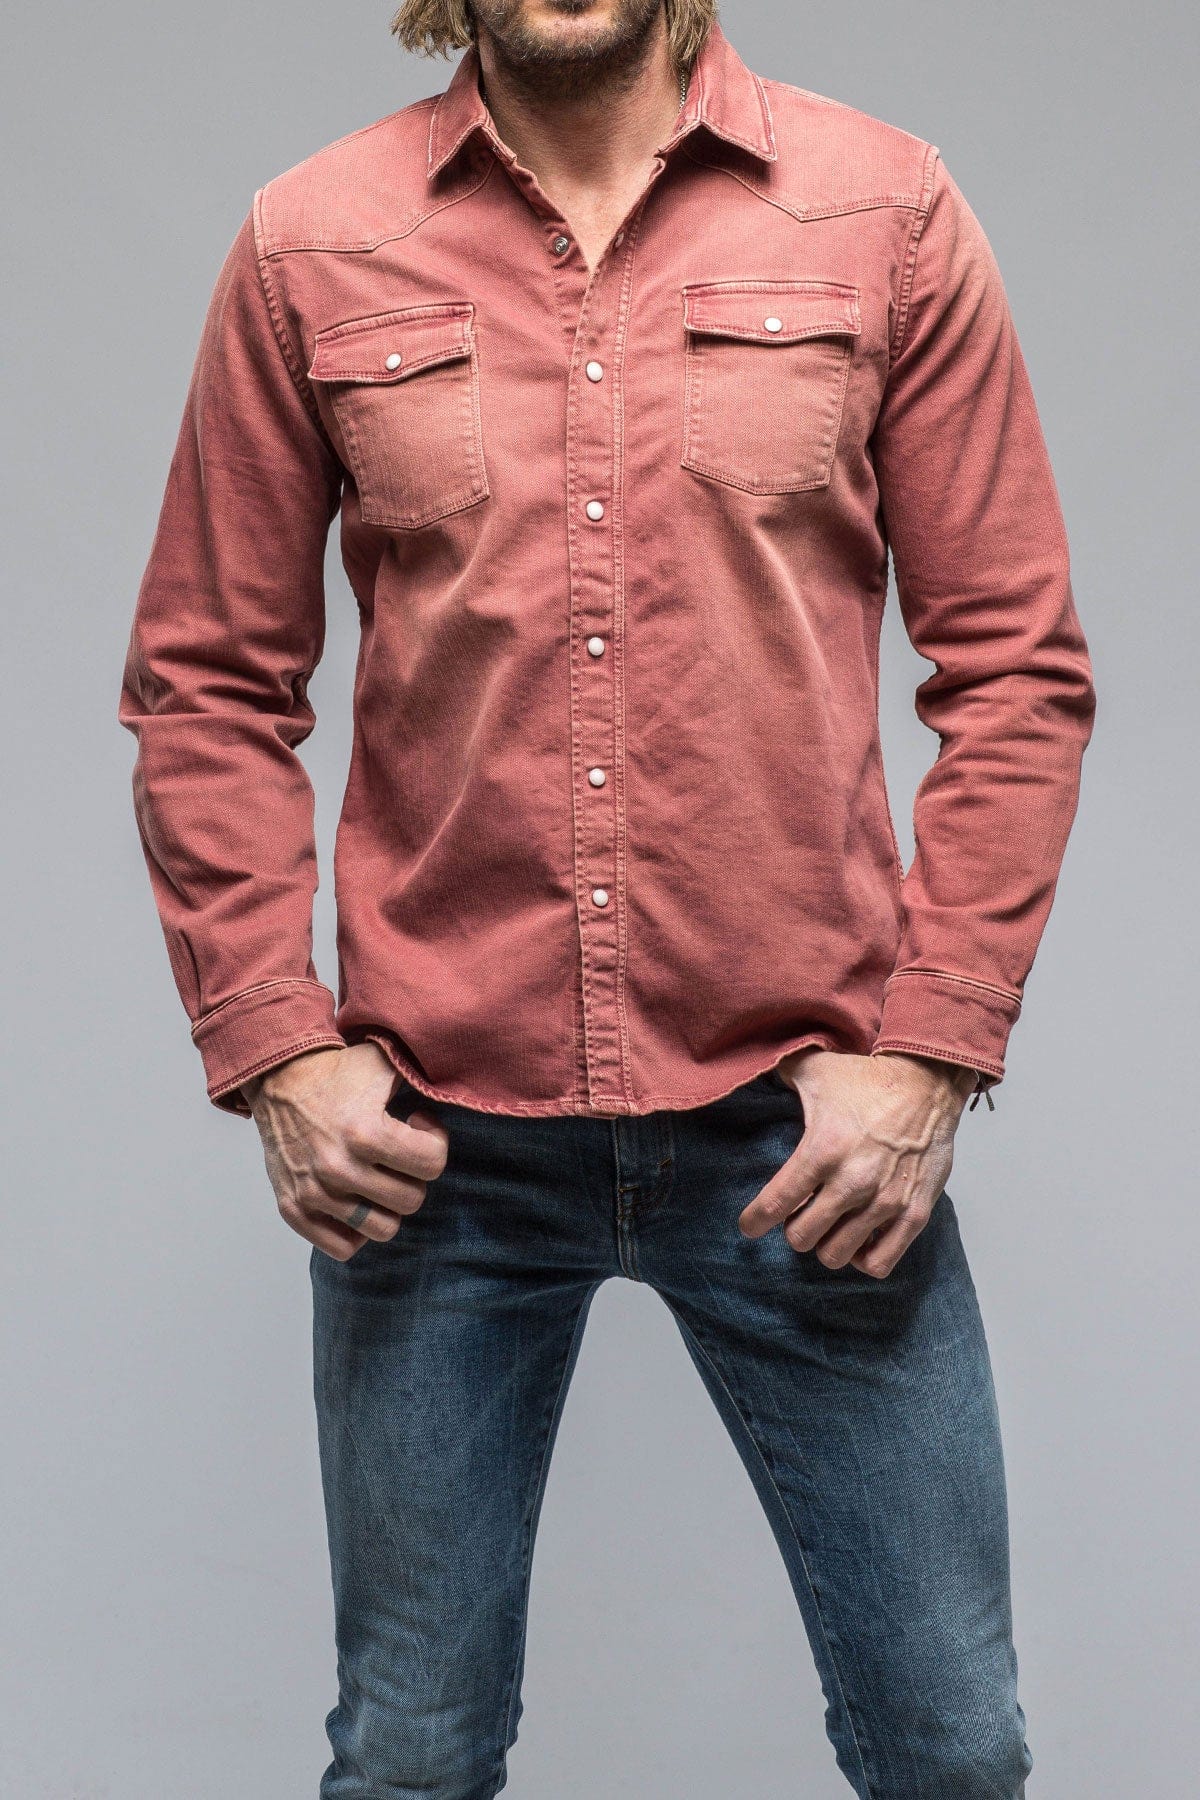 Ranger Colored Denim Snap Shirt In Terracotta - AXEL'S